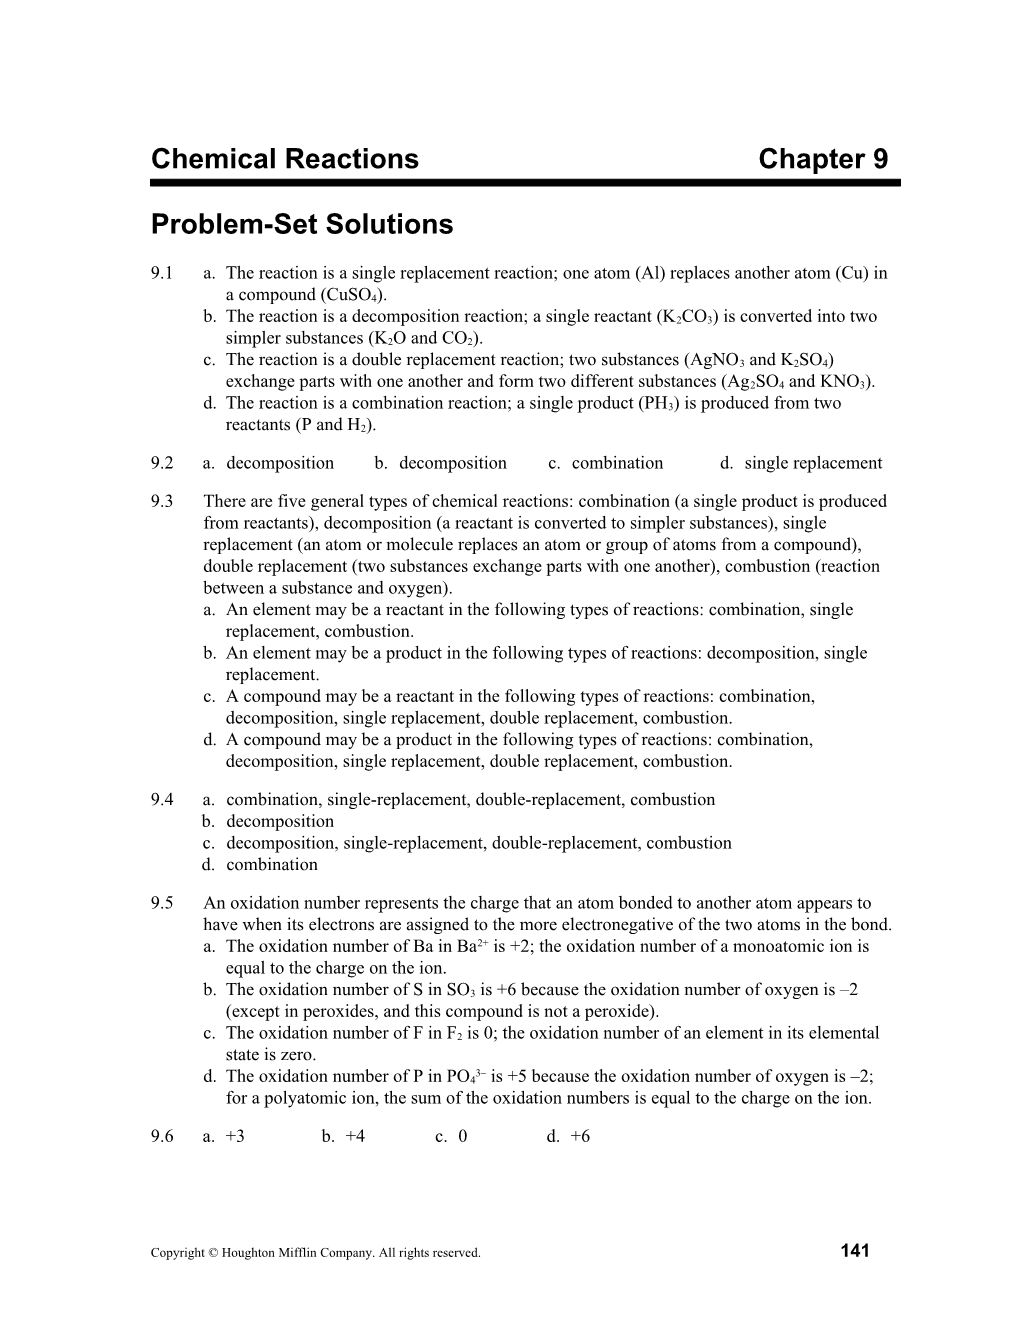 Problem-Set Solutions Chapter 91